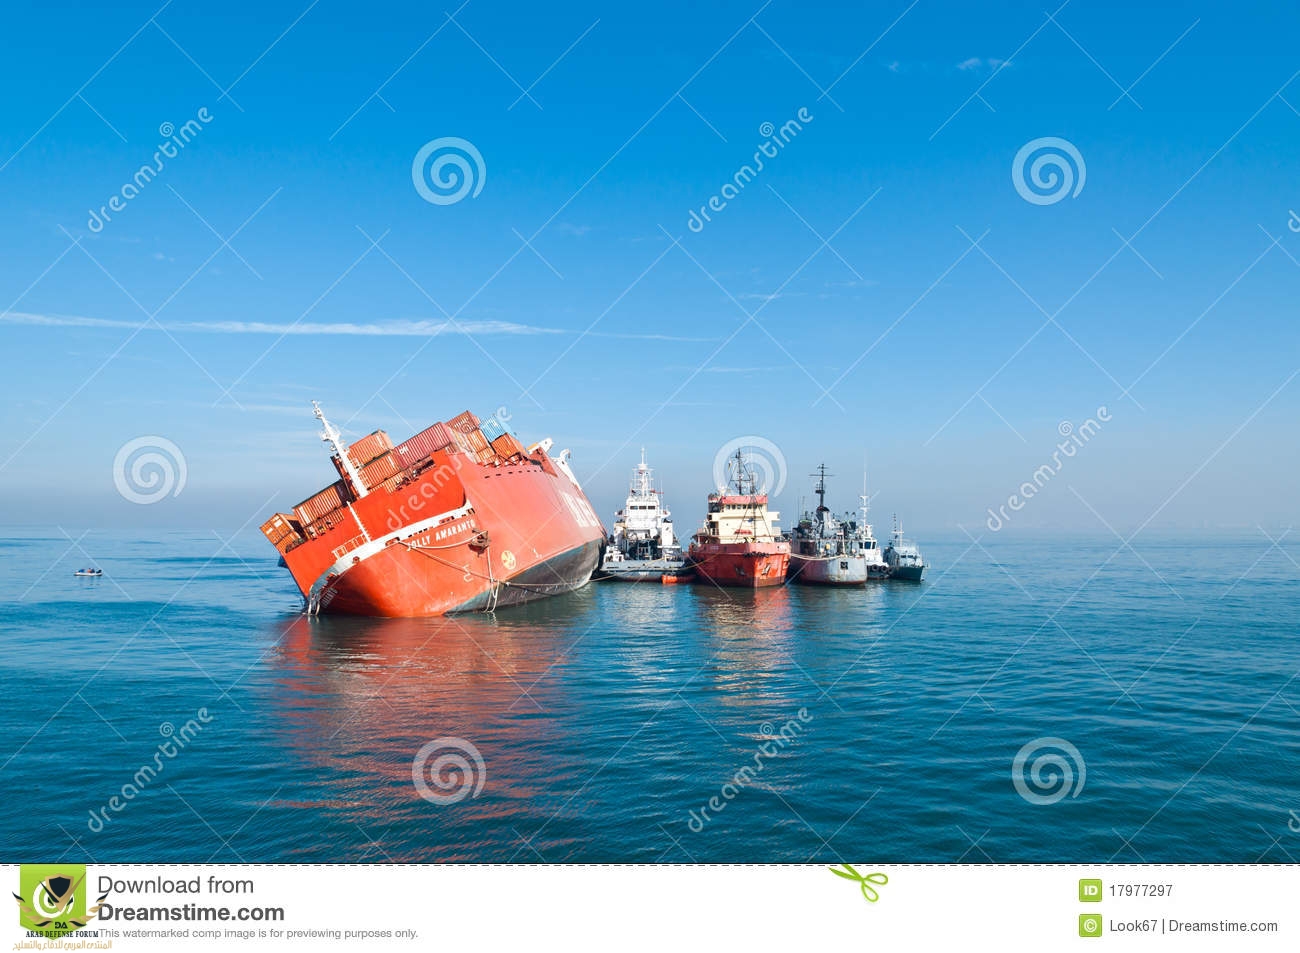 grounded-ro-ro-vessel-jolly-amaranto-17977297.jpg